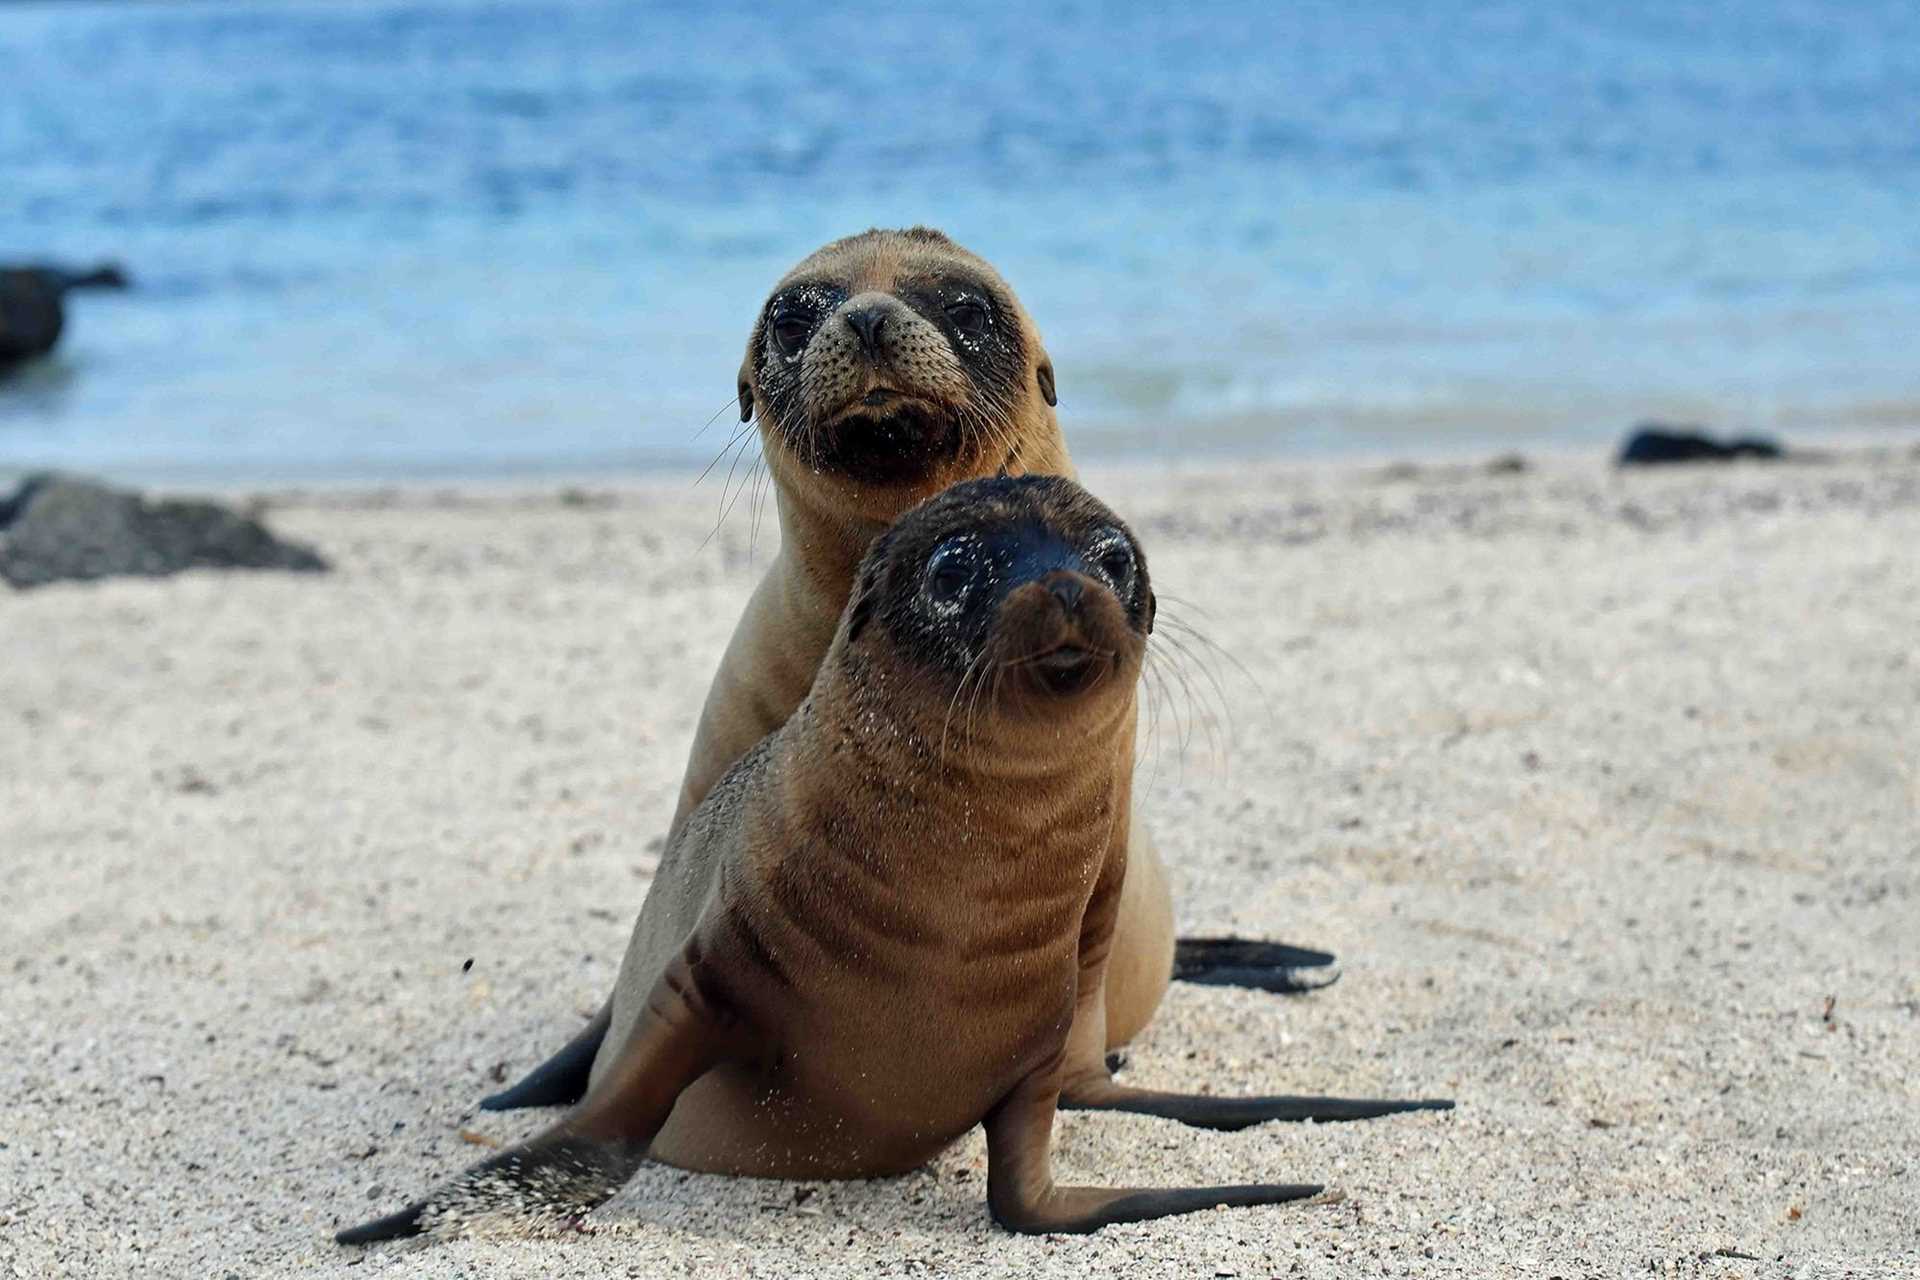 baby sea lions